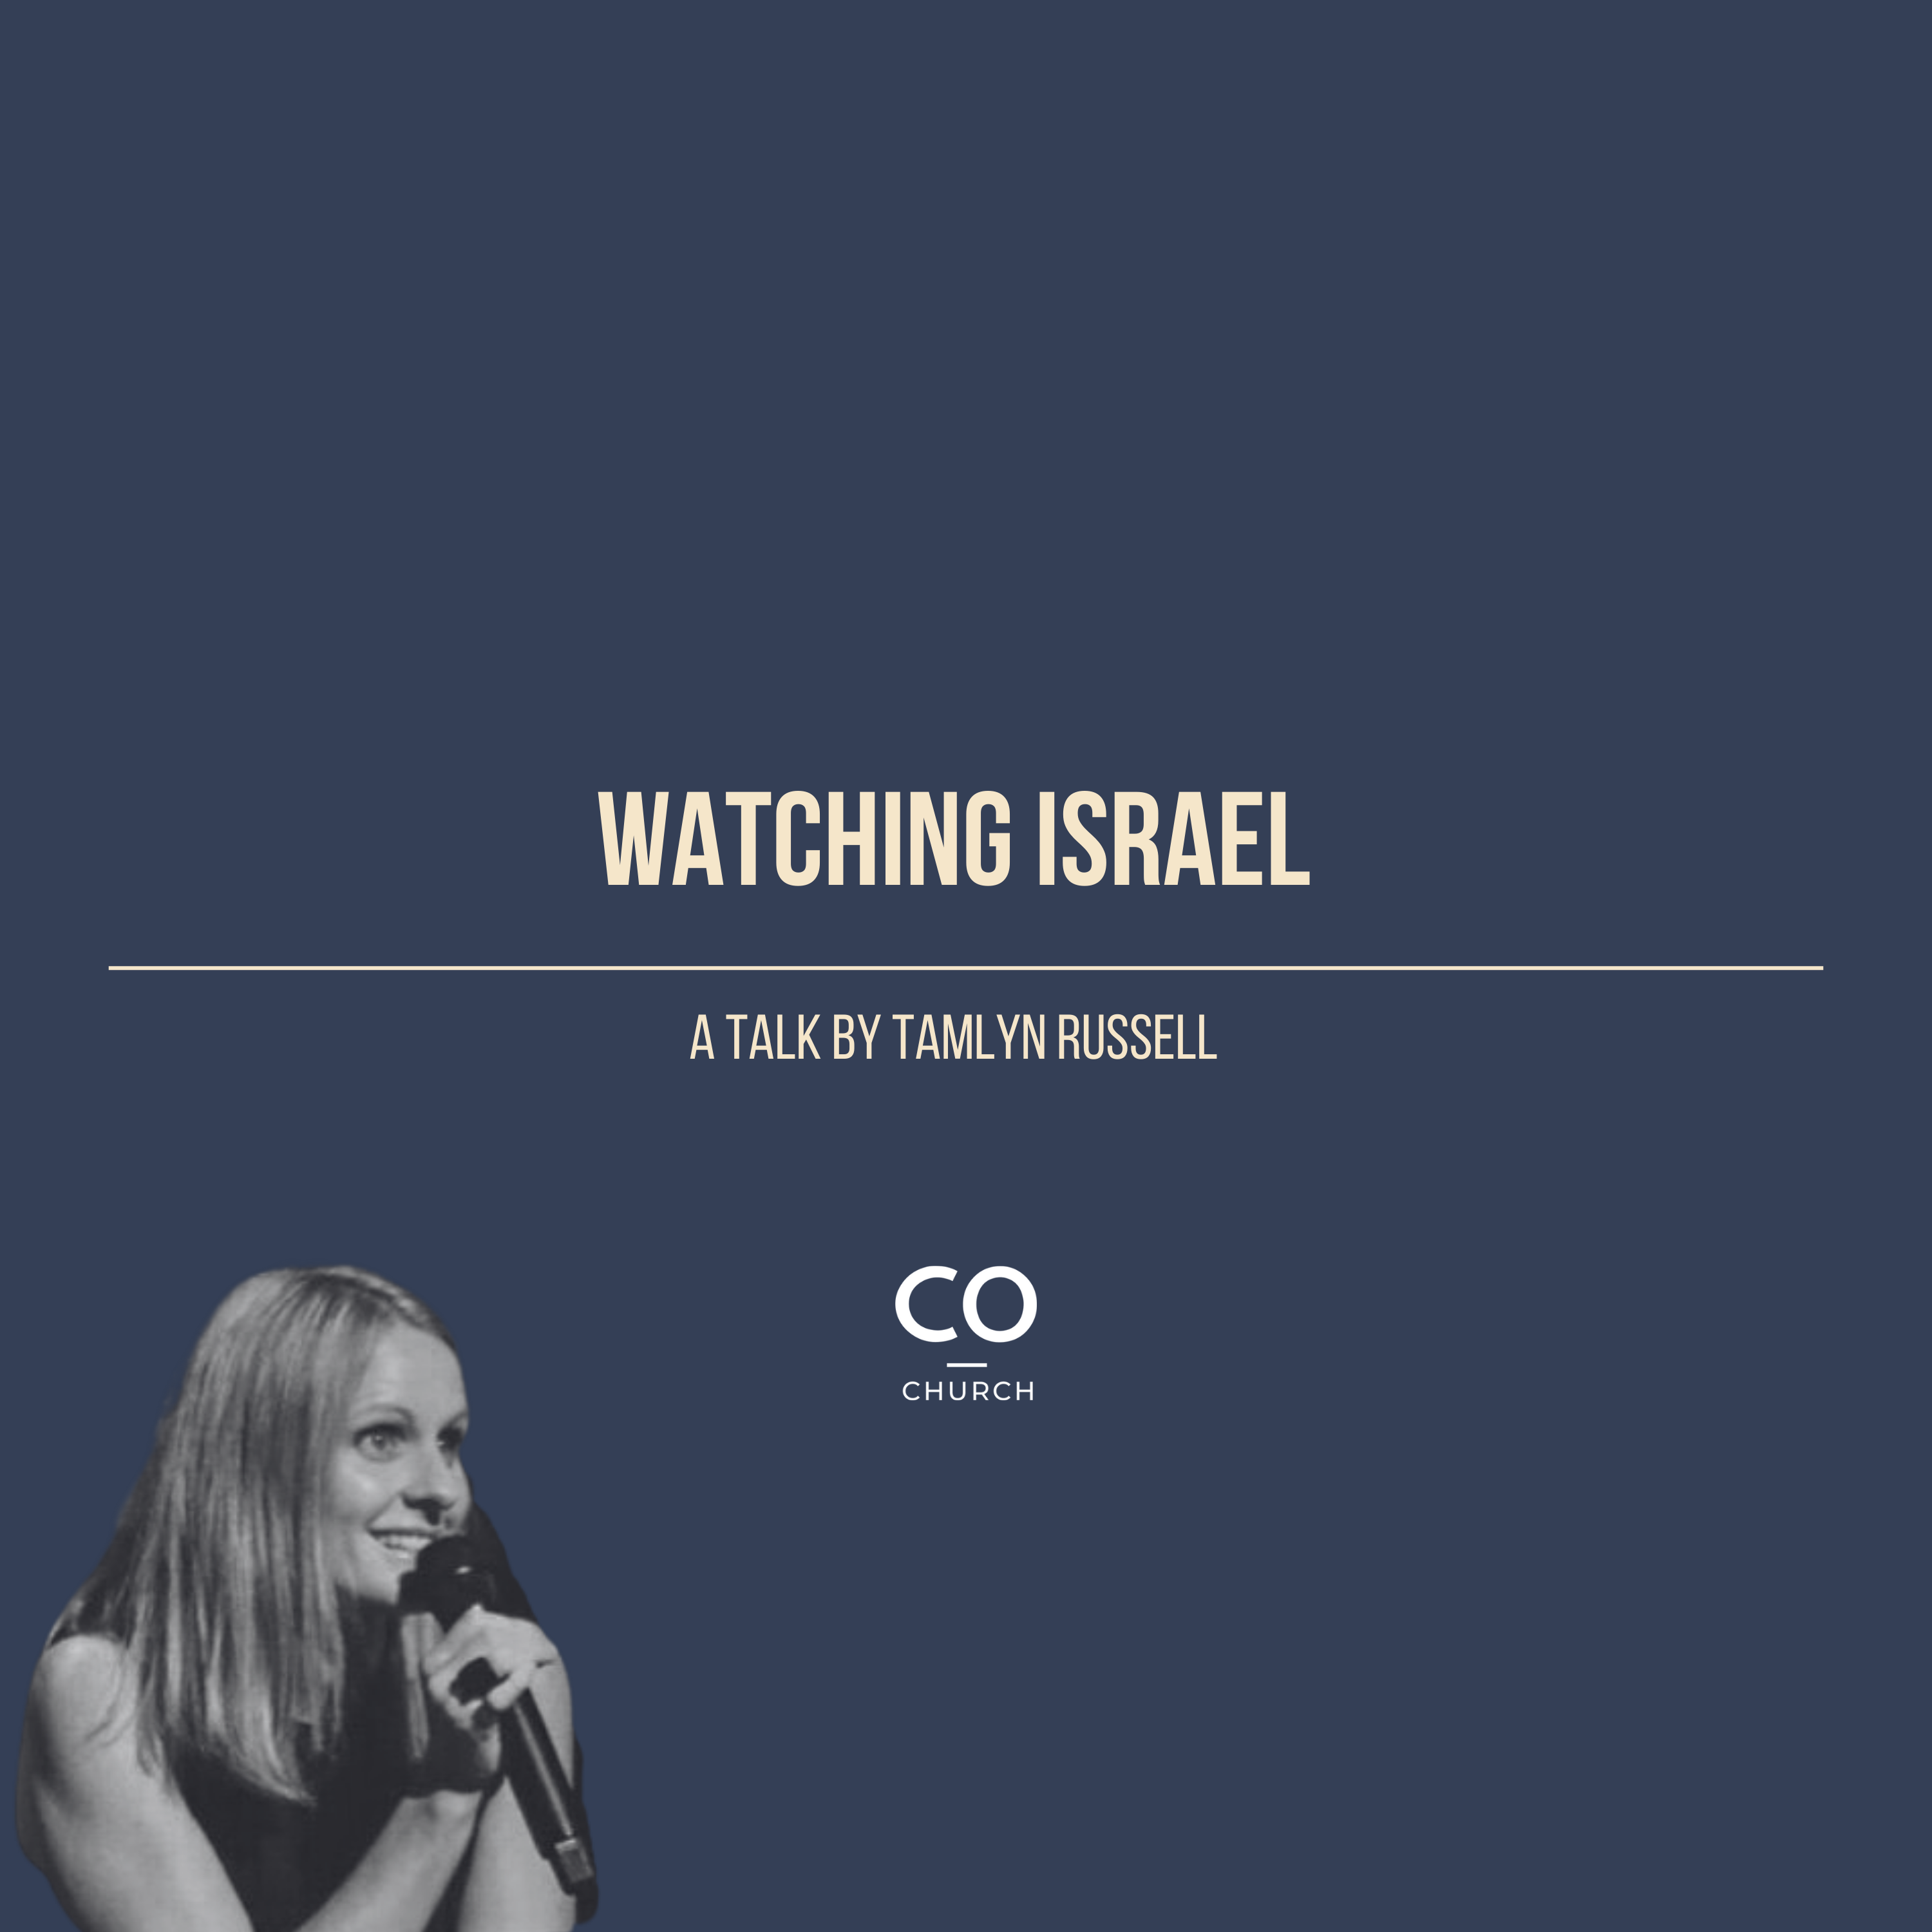 Watching Israel - A Talk by Tamlyn Russell